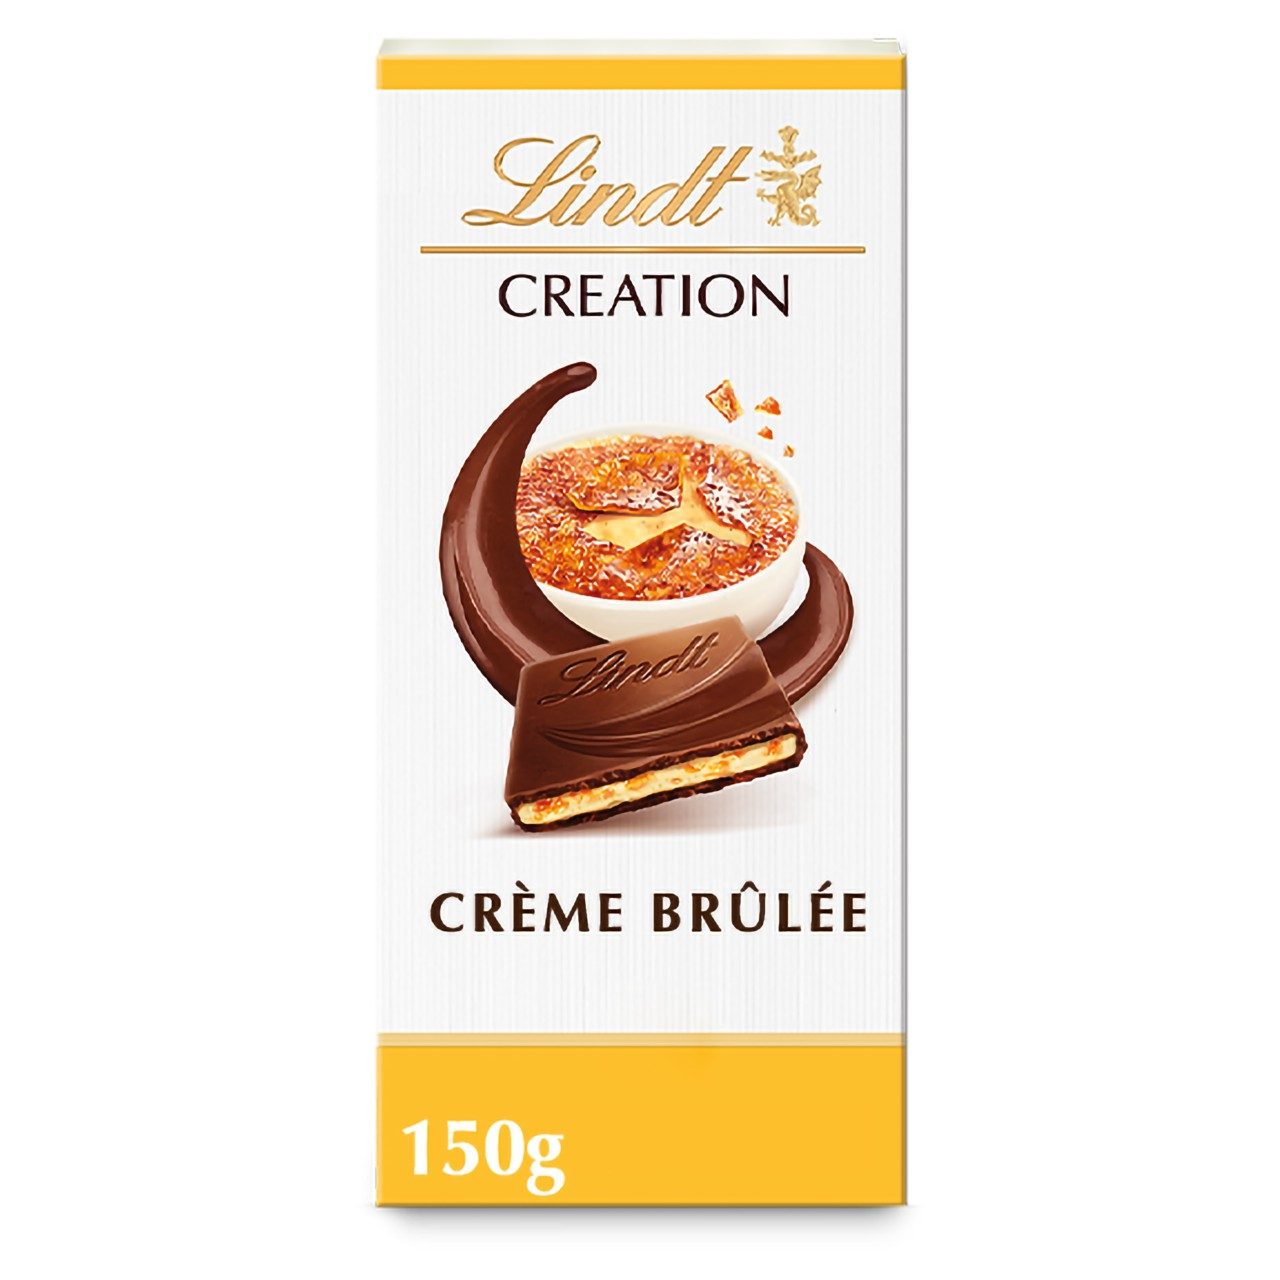 Chocolade creation crème brulee